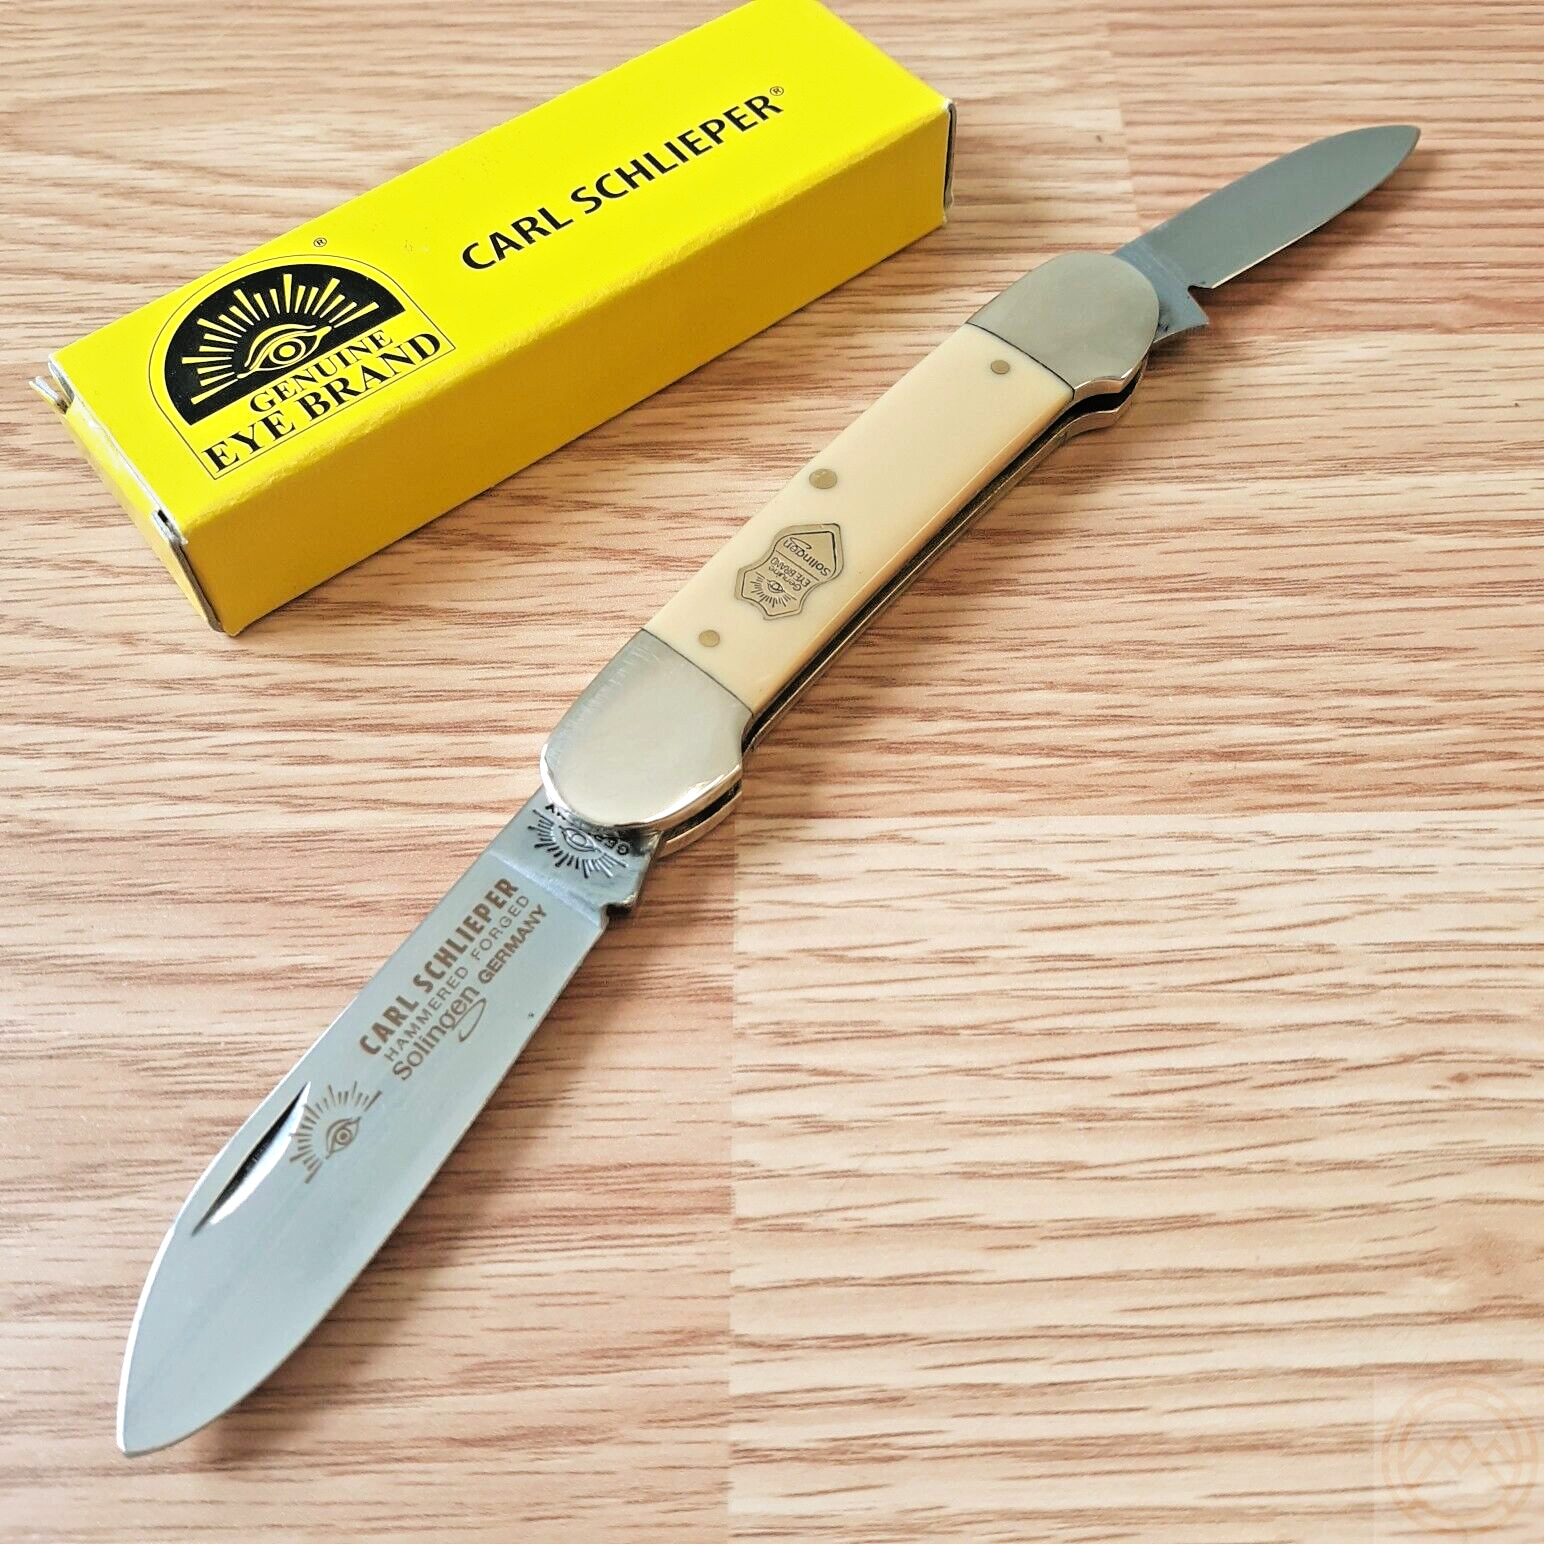 German Eye Carl Schlieper Pocket Knife Carbon Steel Blades Smooth Yellow Handle